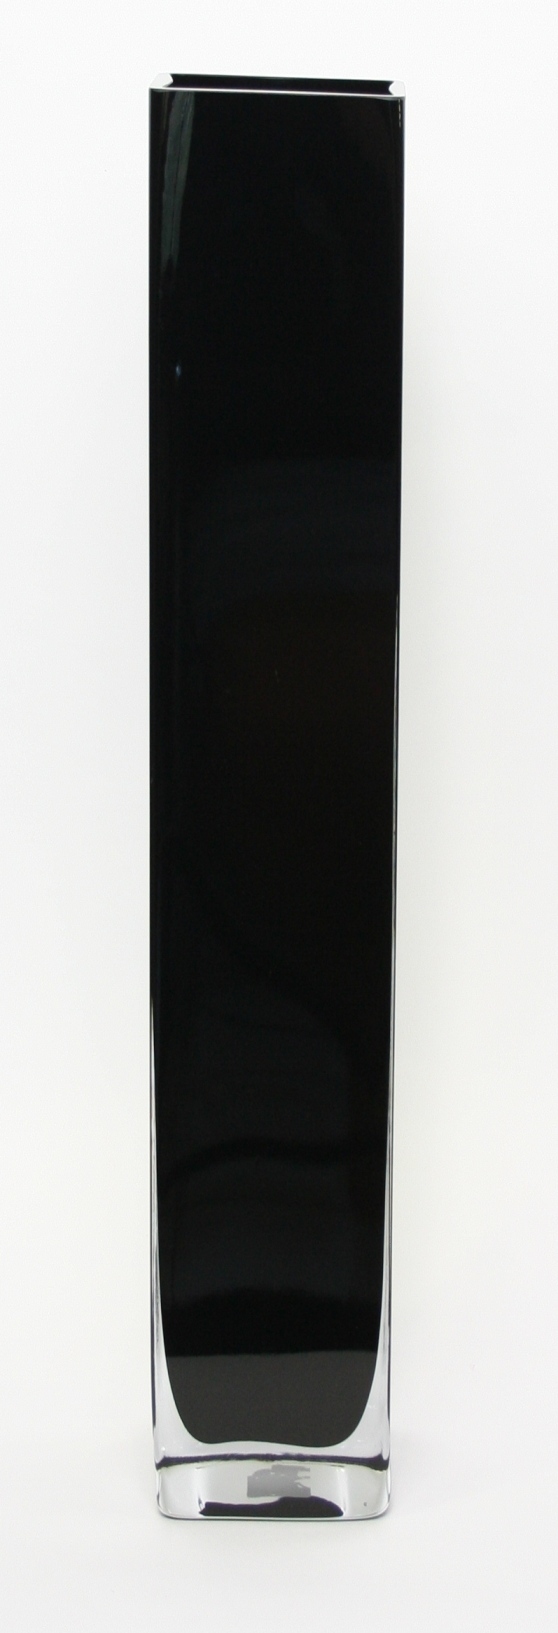 Accuvaas zwart glas 10 cm breed 40 cm hoog heavy glas